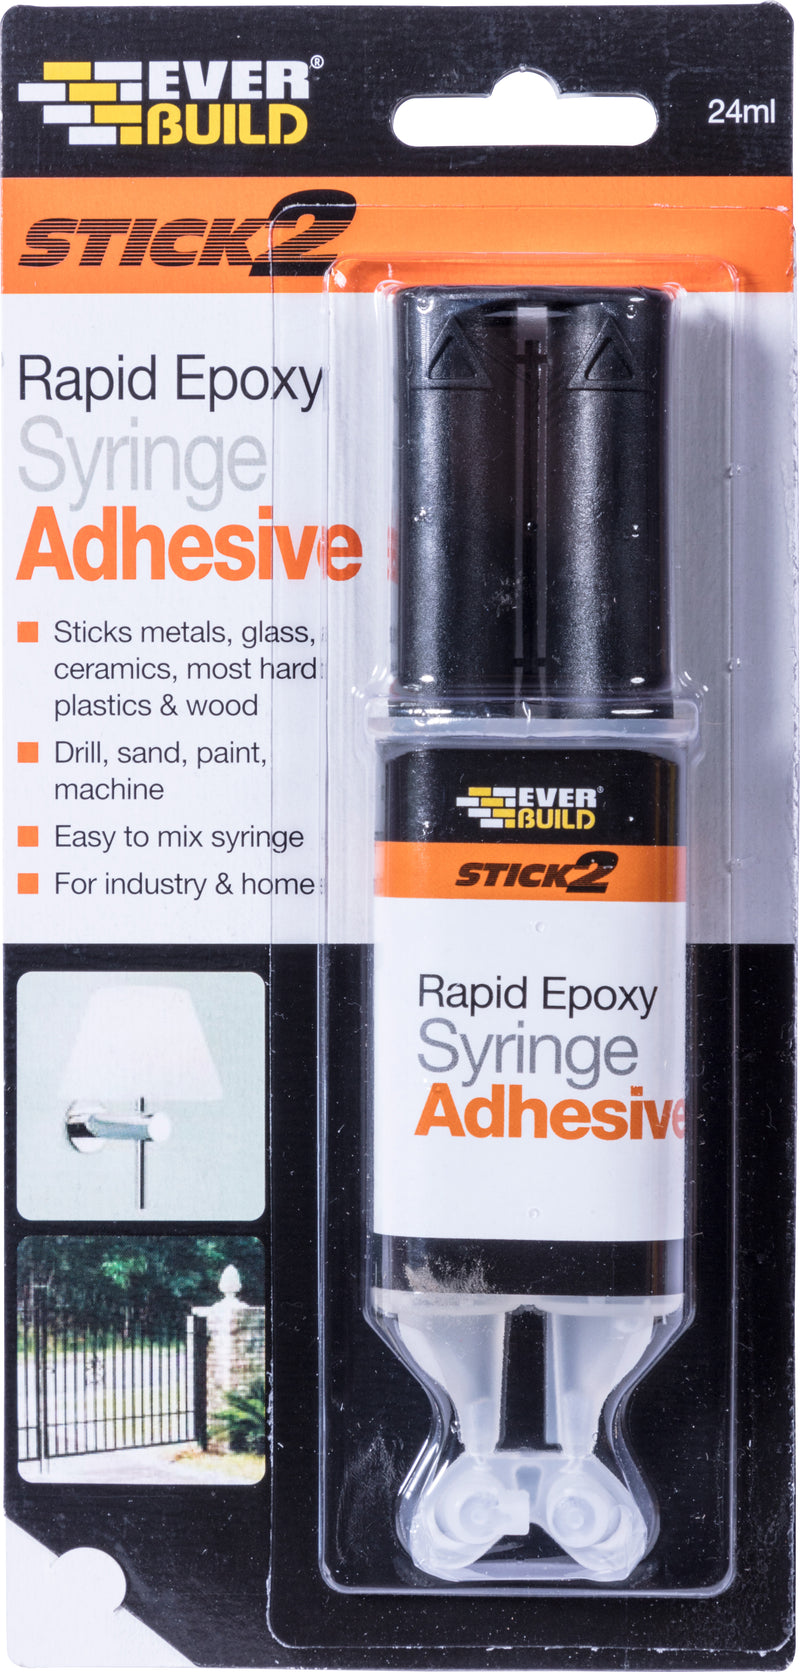 Everbuild - Rapid Epoxy Syringe Adhesive - 24ml